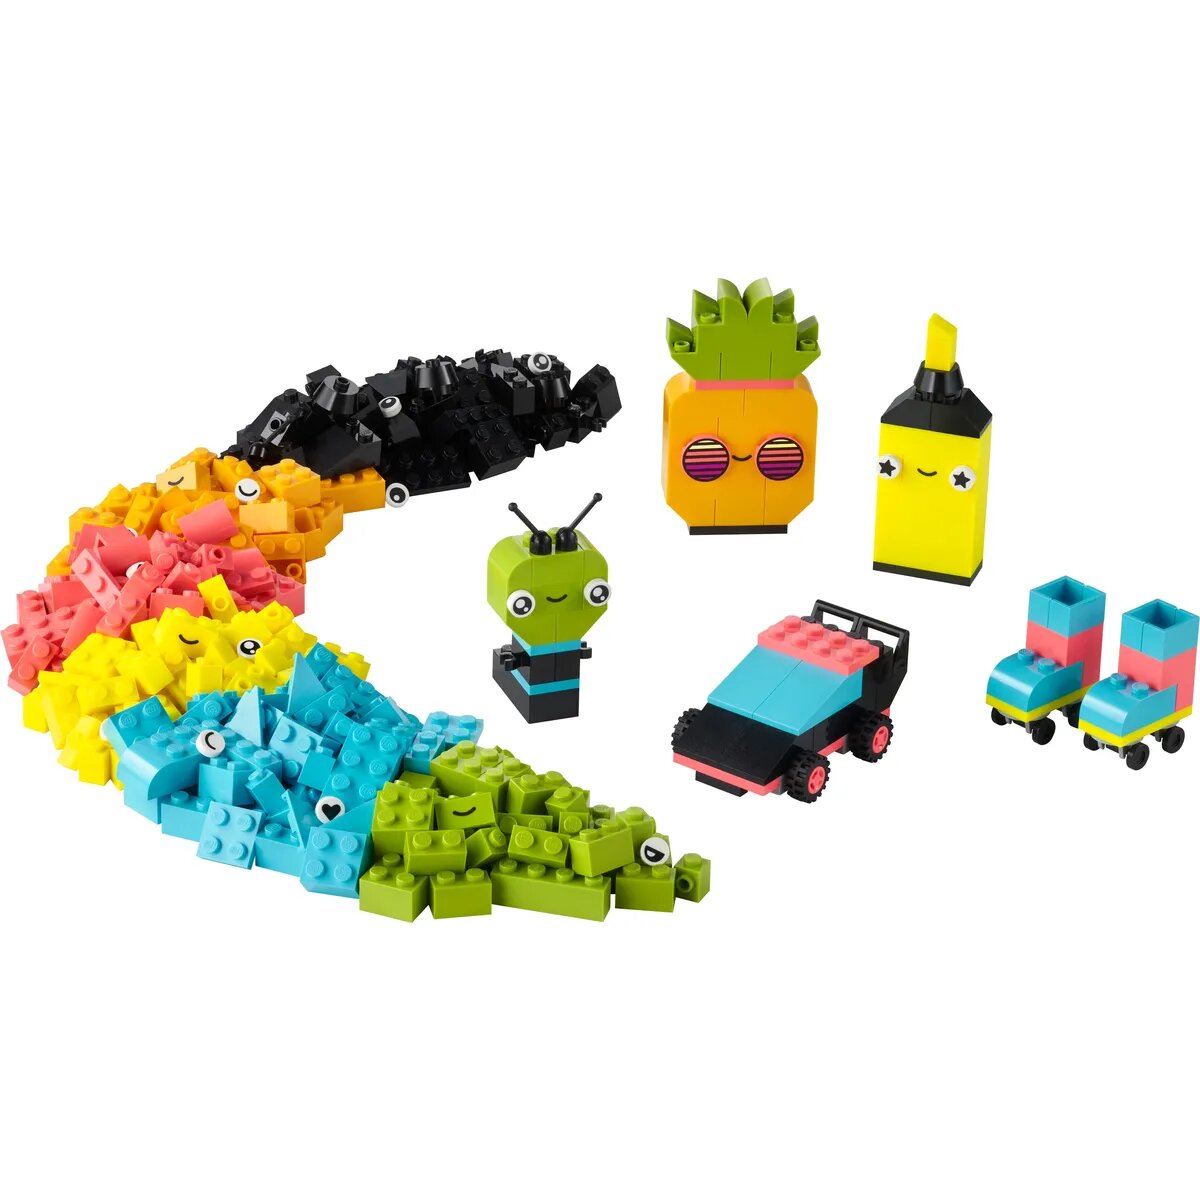 LEGO® Classic 11027 Neon Kreativ-Bauset